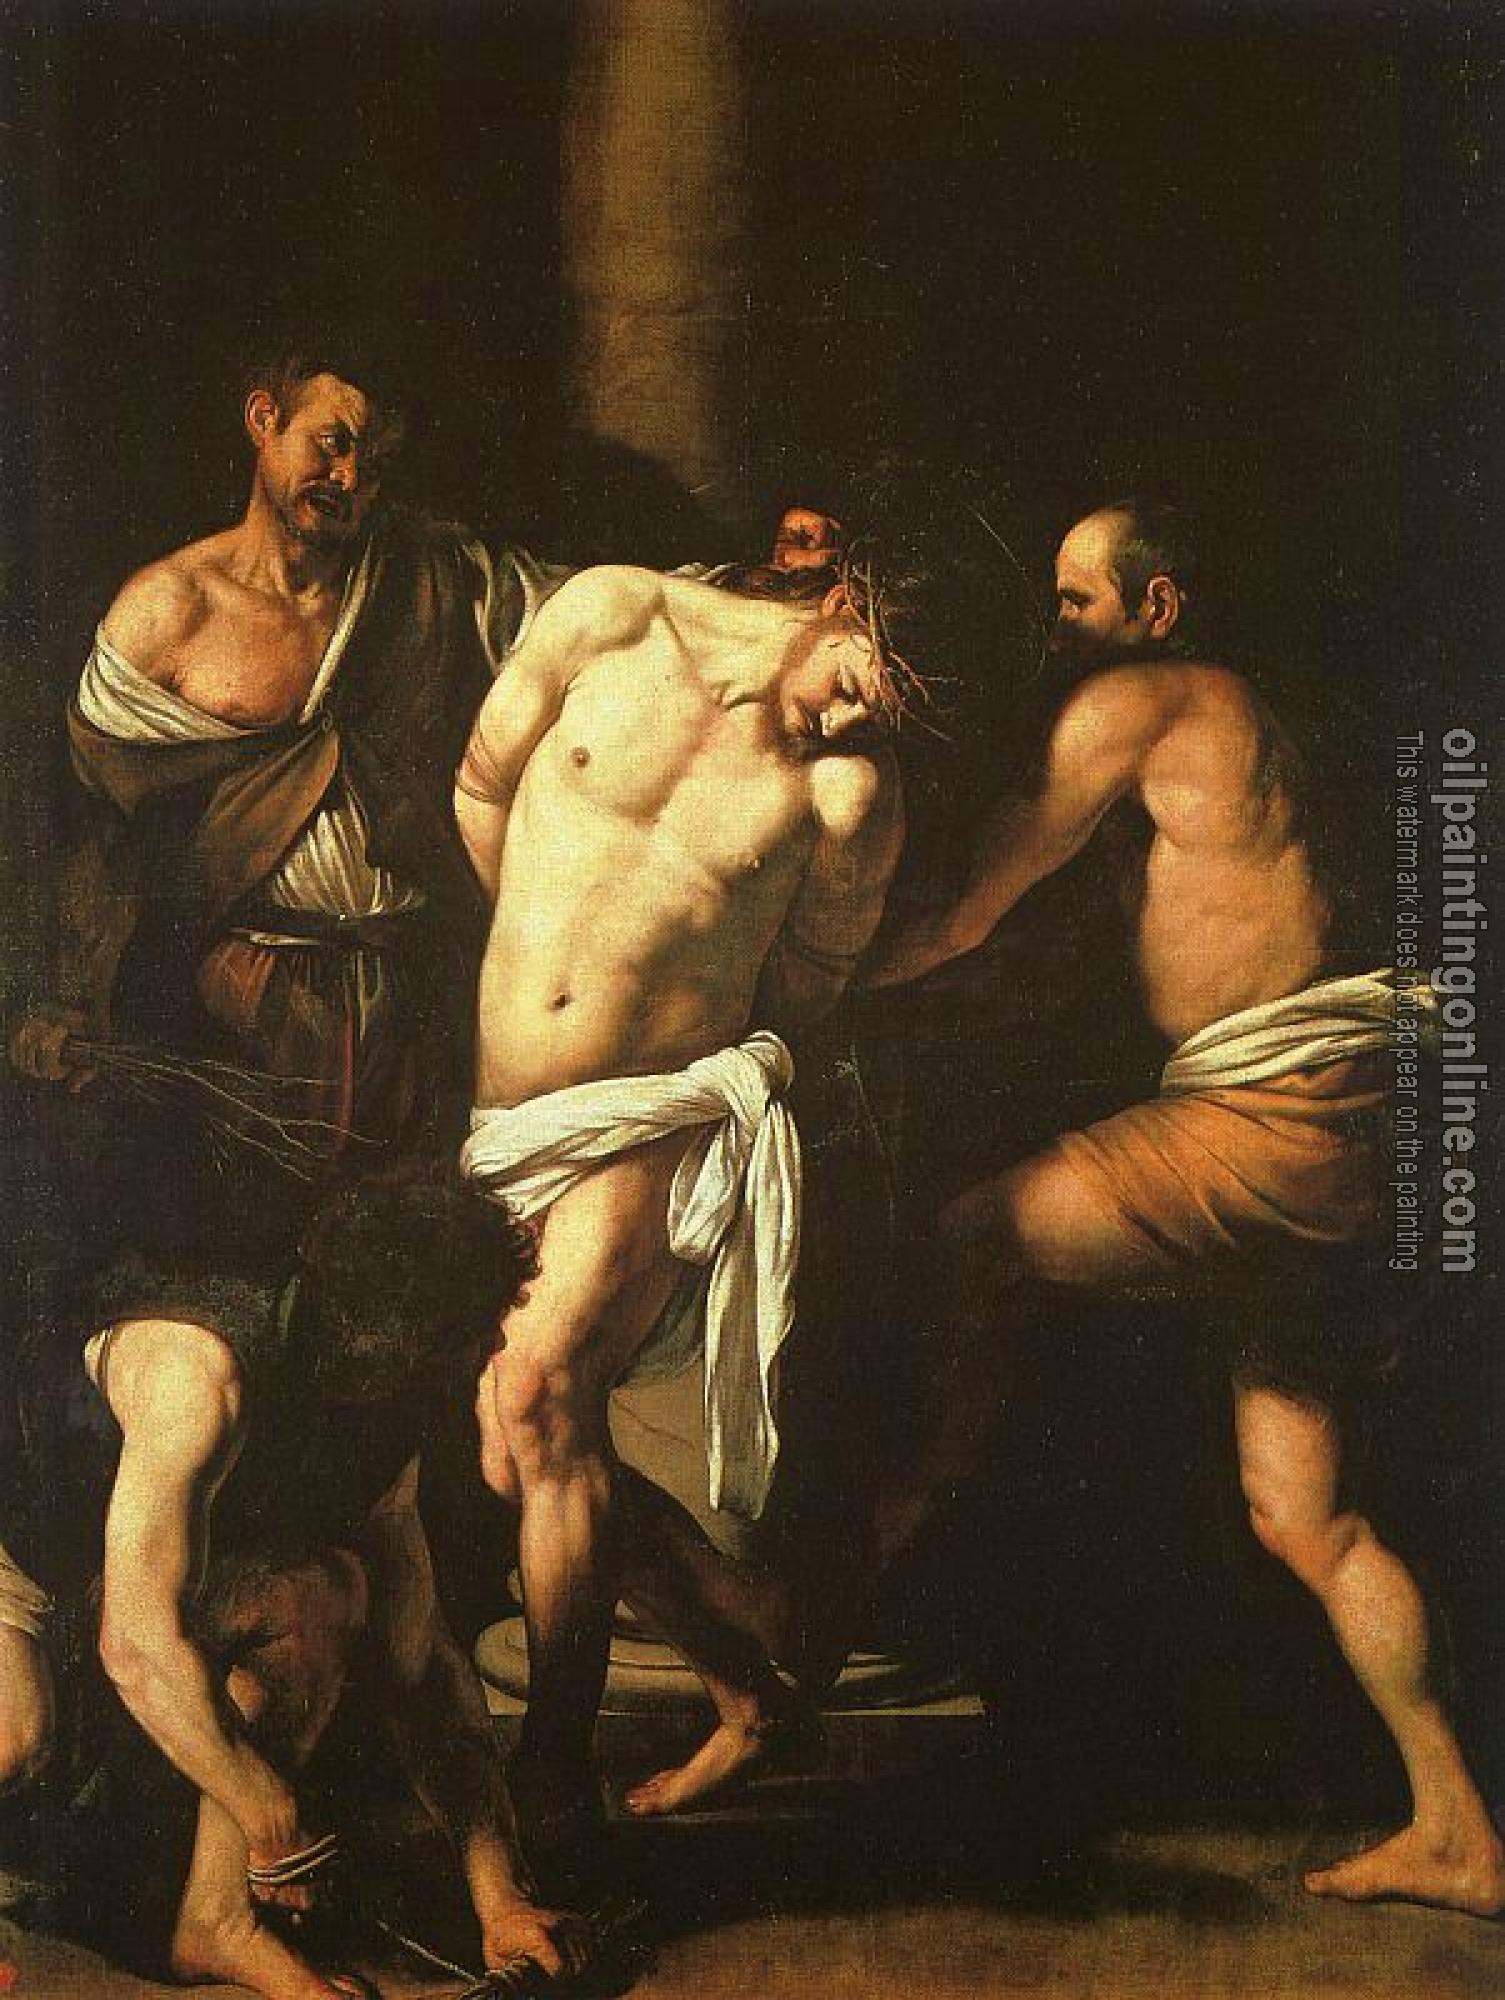 Caravaggio - The Flagellation of Christ